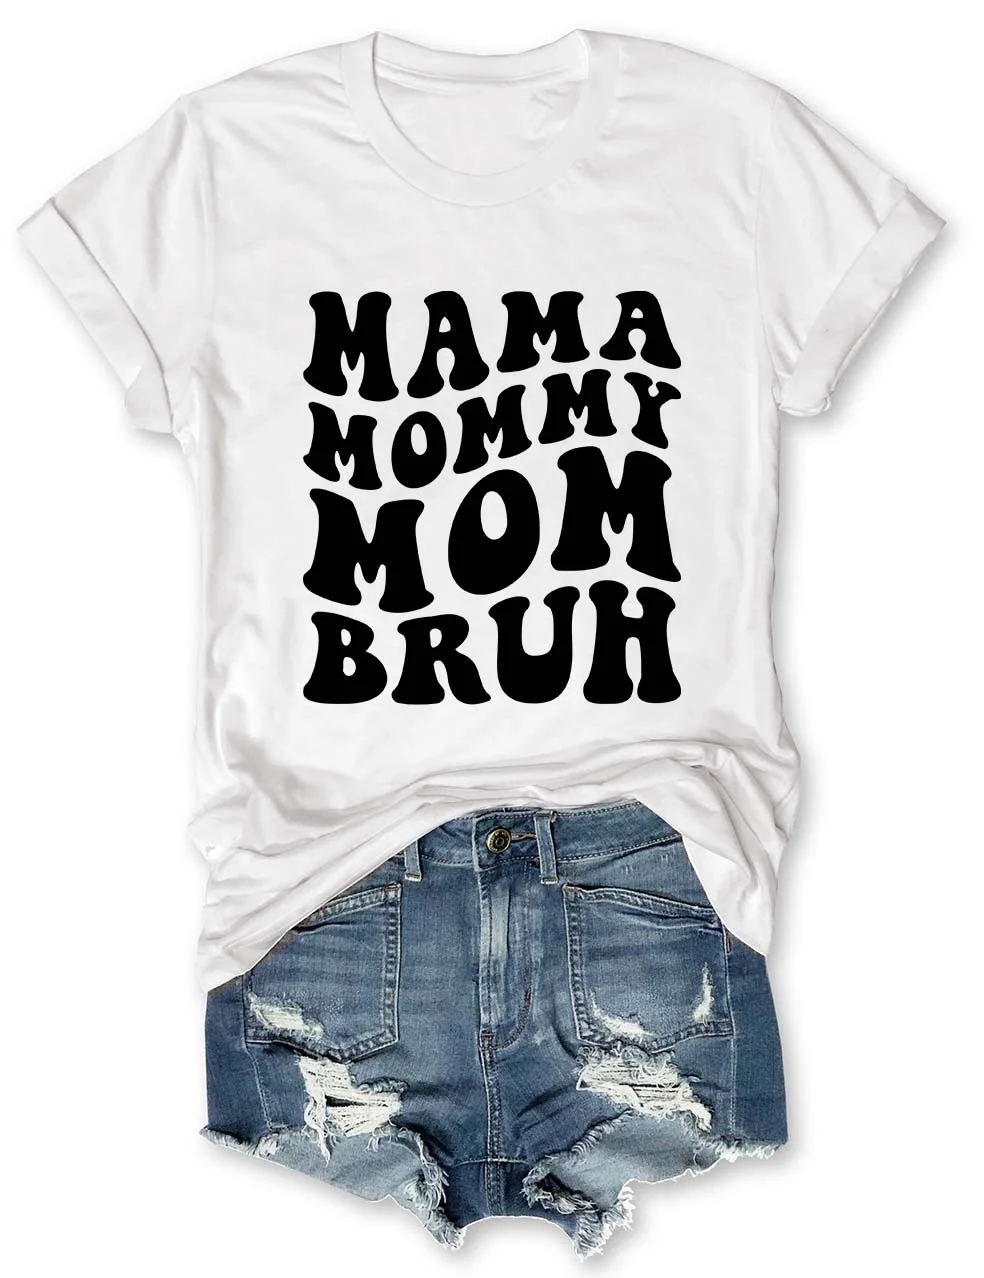 Ma Mama Mom Bruh T-Shirt